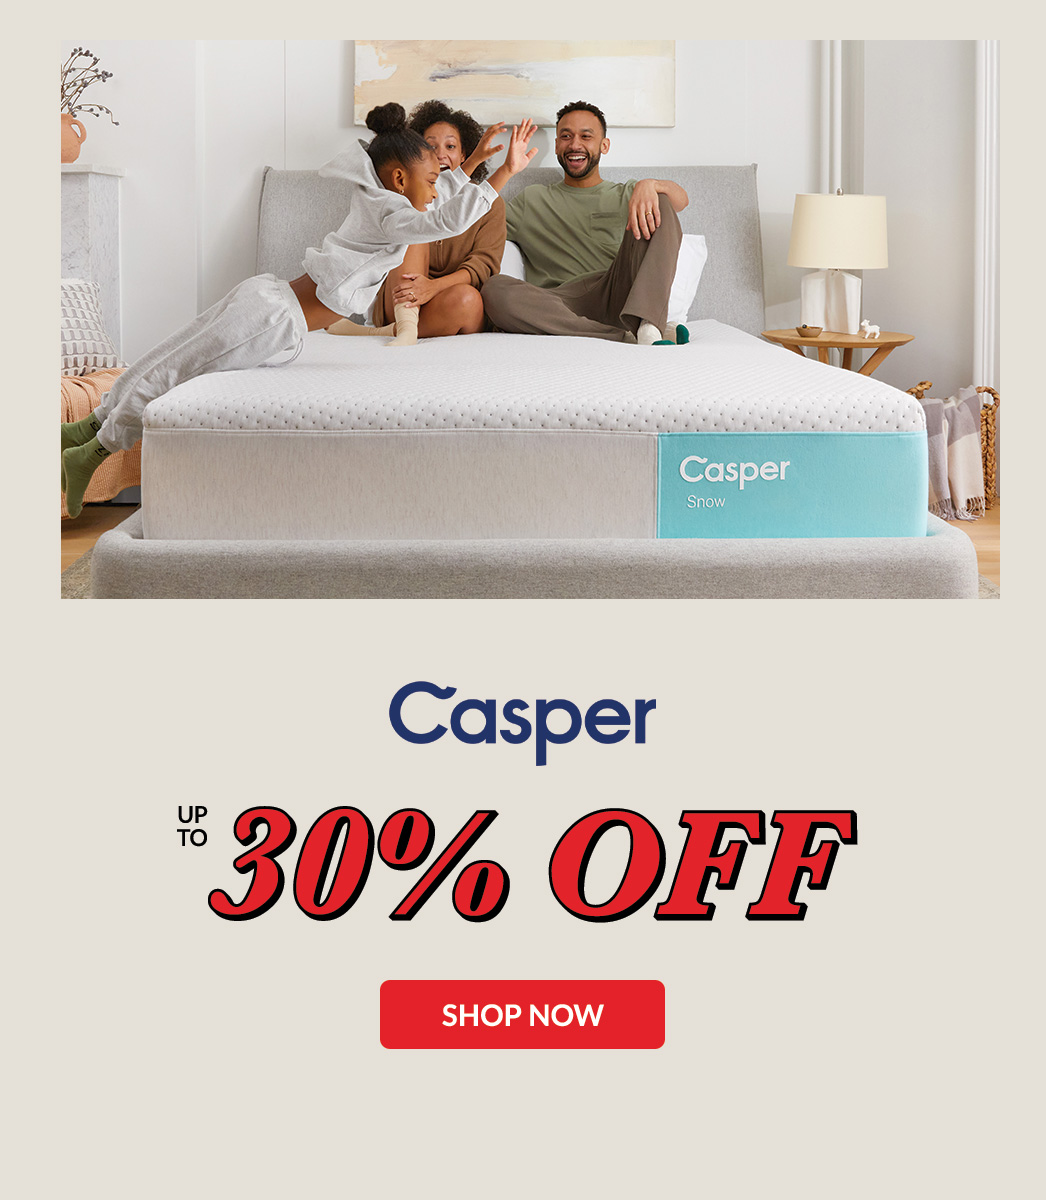 Casper up to 30% off